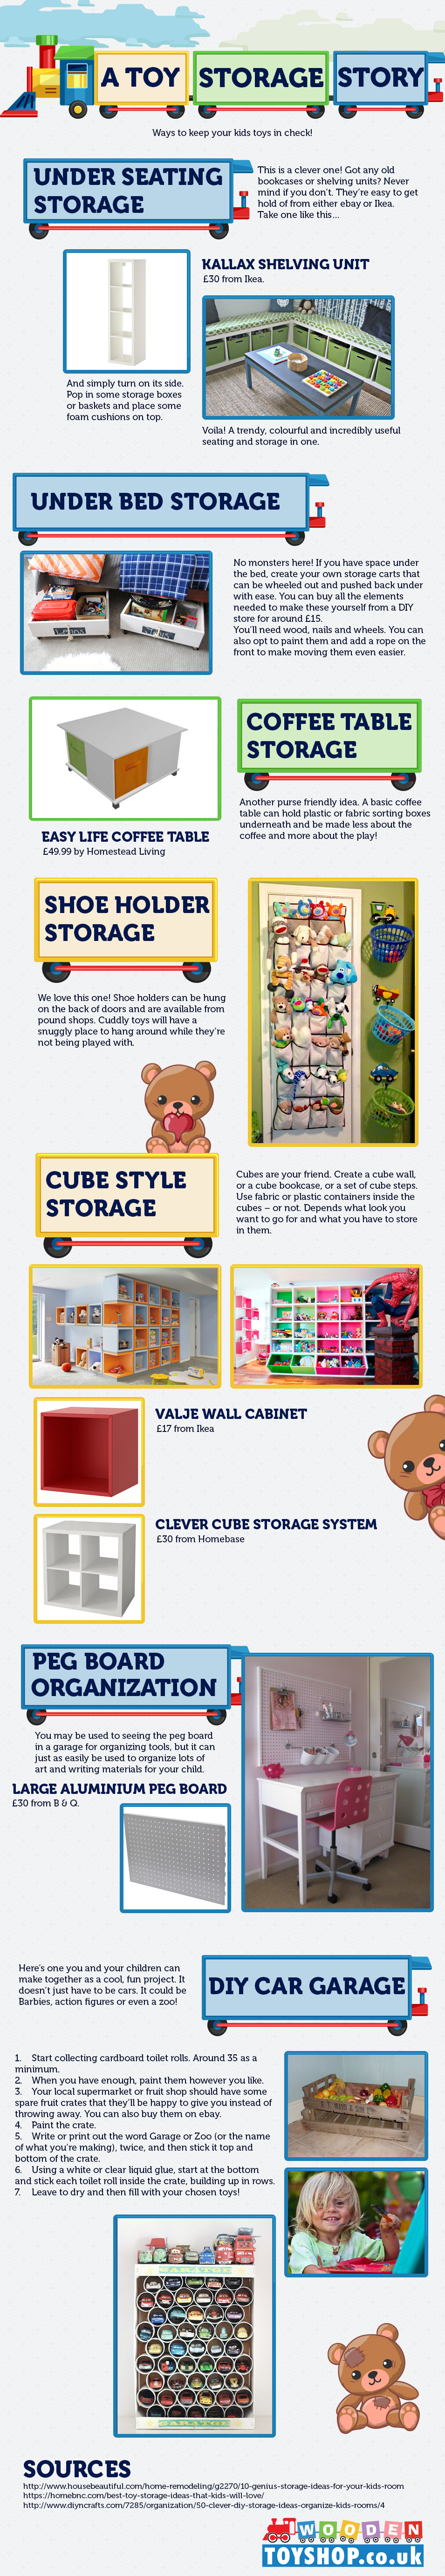 A Toy Storage Story by WoodenToyShop.co.uk